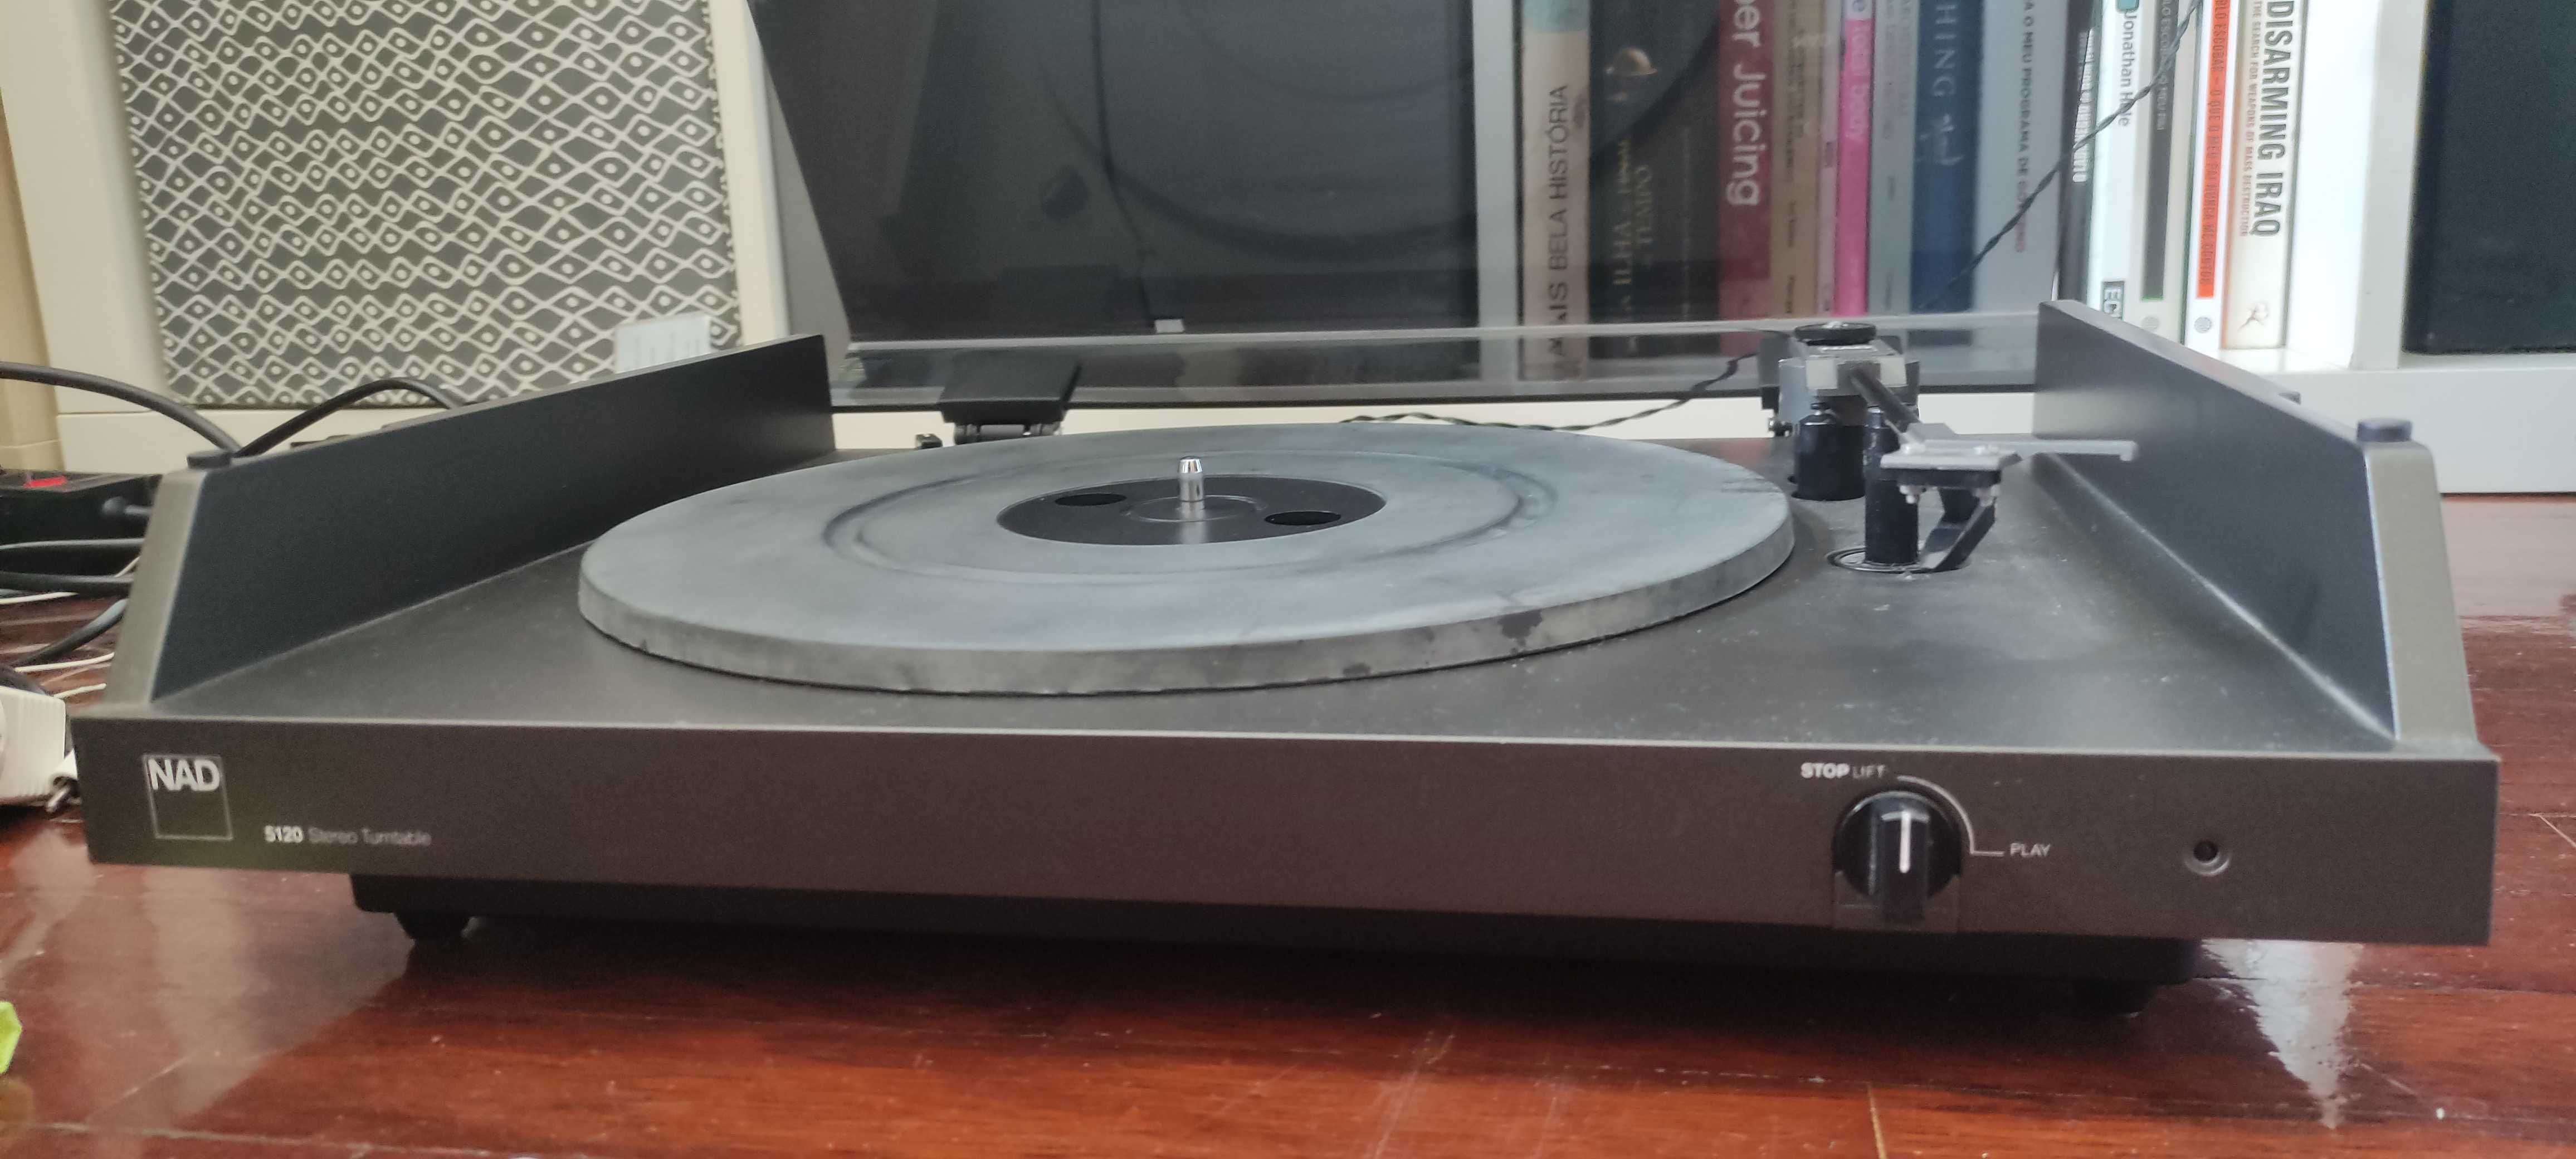 Gira-discos, turntable, NAD 5120 vinil